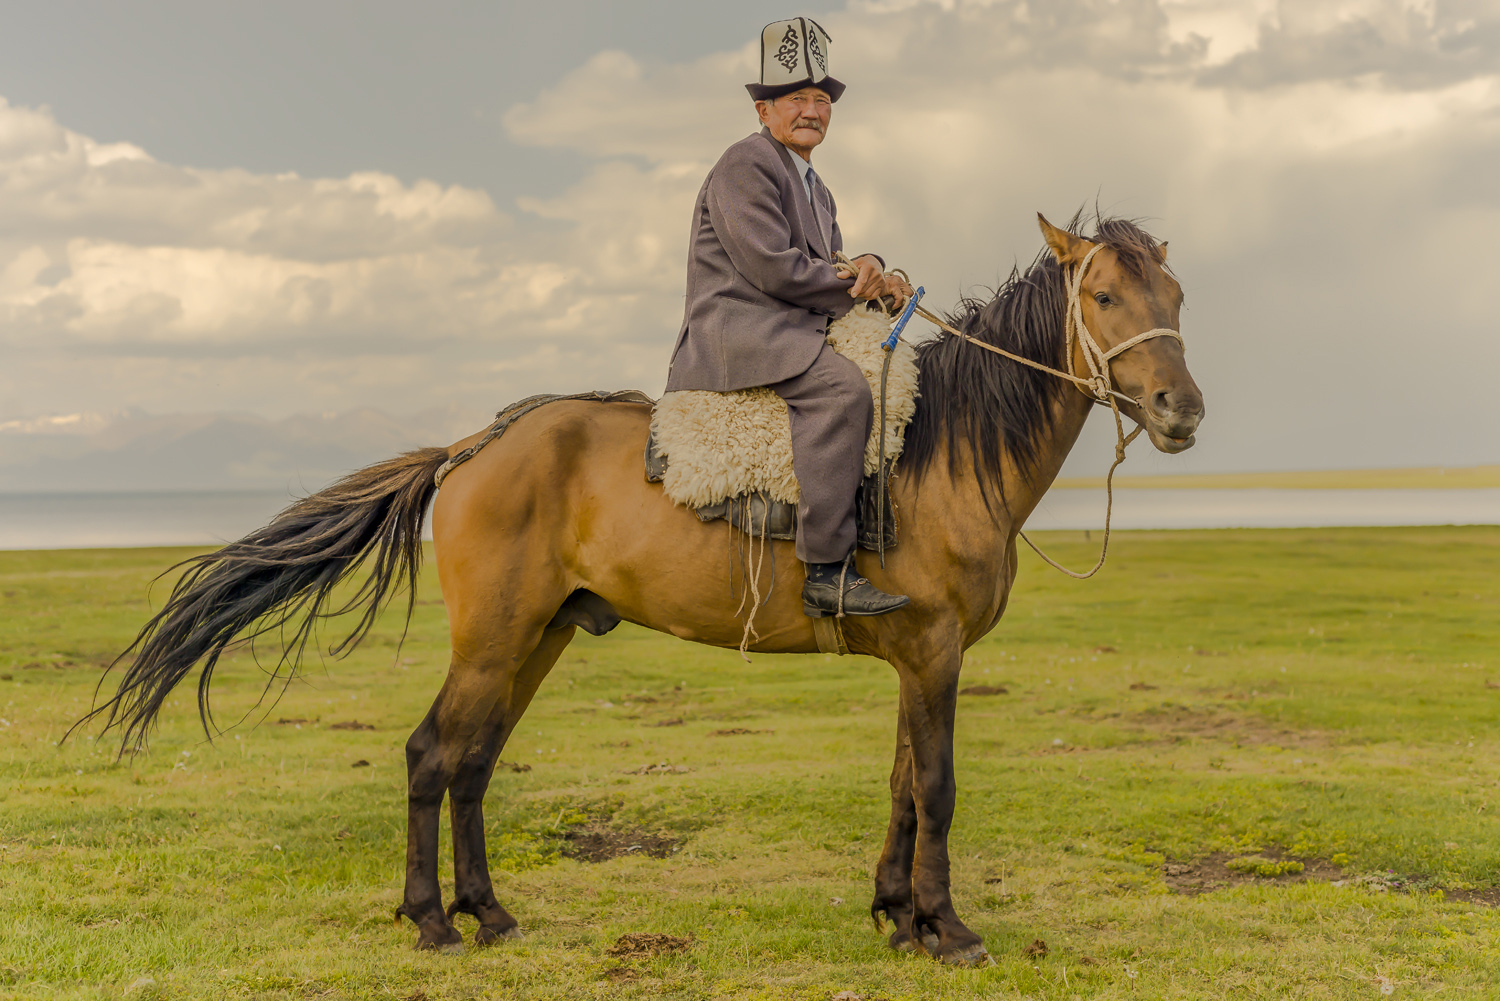 kyrgyzstan-nomads-lake-song-kul-jo-kearney-video-photography-soviet-kyrgyz-horseman-riding-horse-traditional.jpg